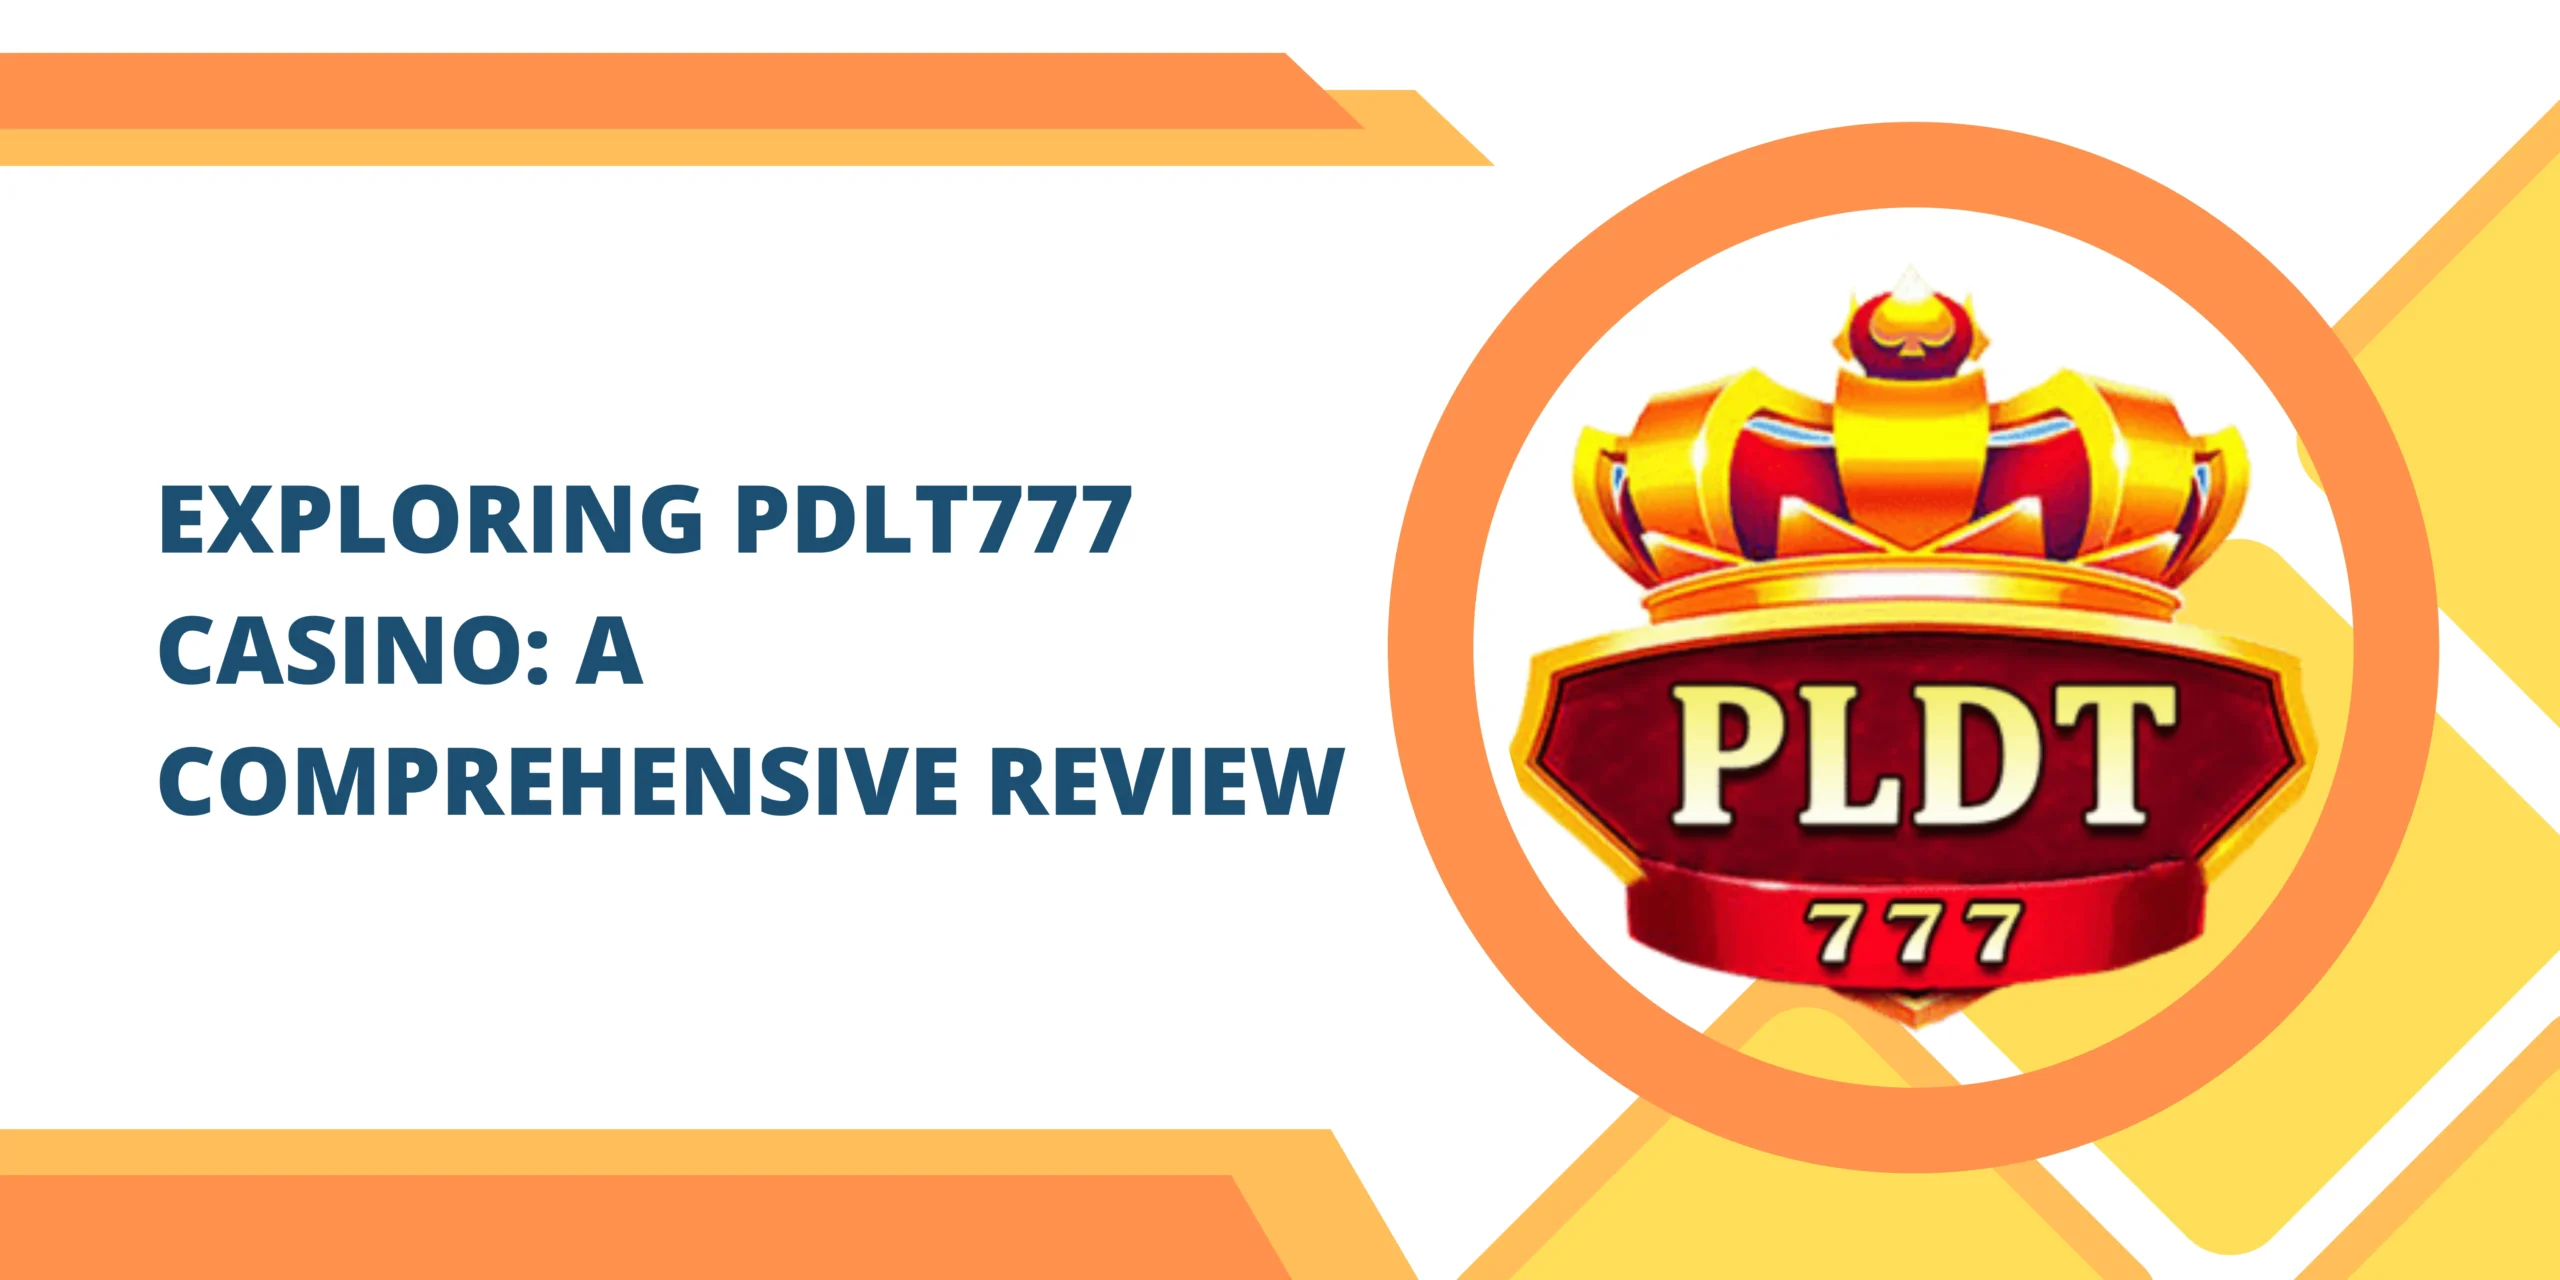 Exploring PLDT777 Casino: A Comprehensive Review